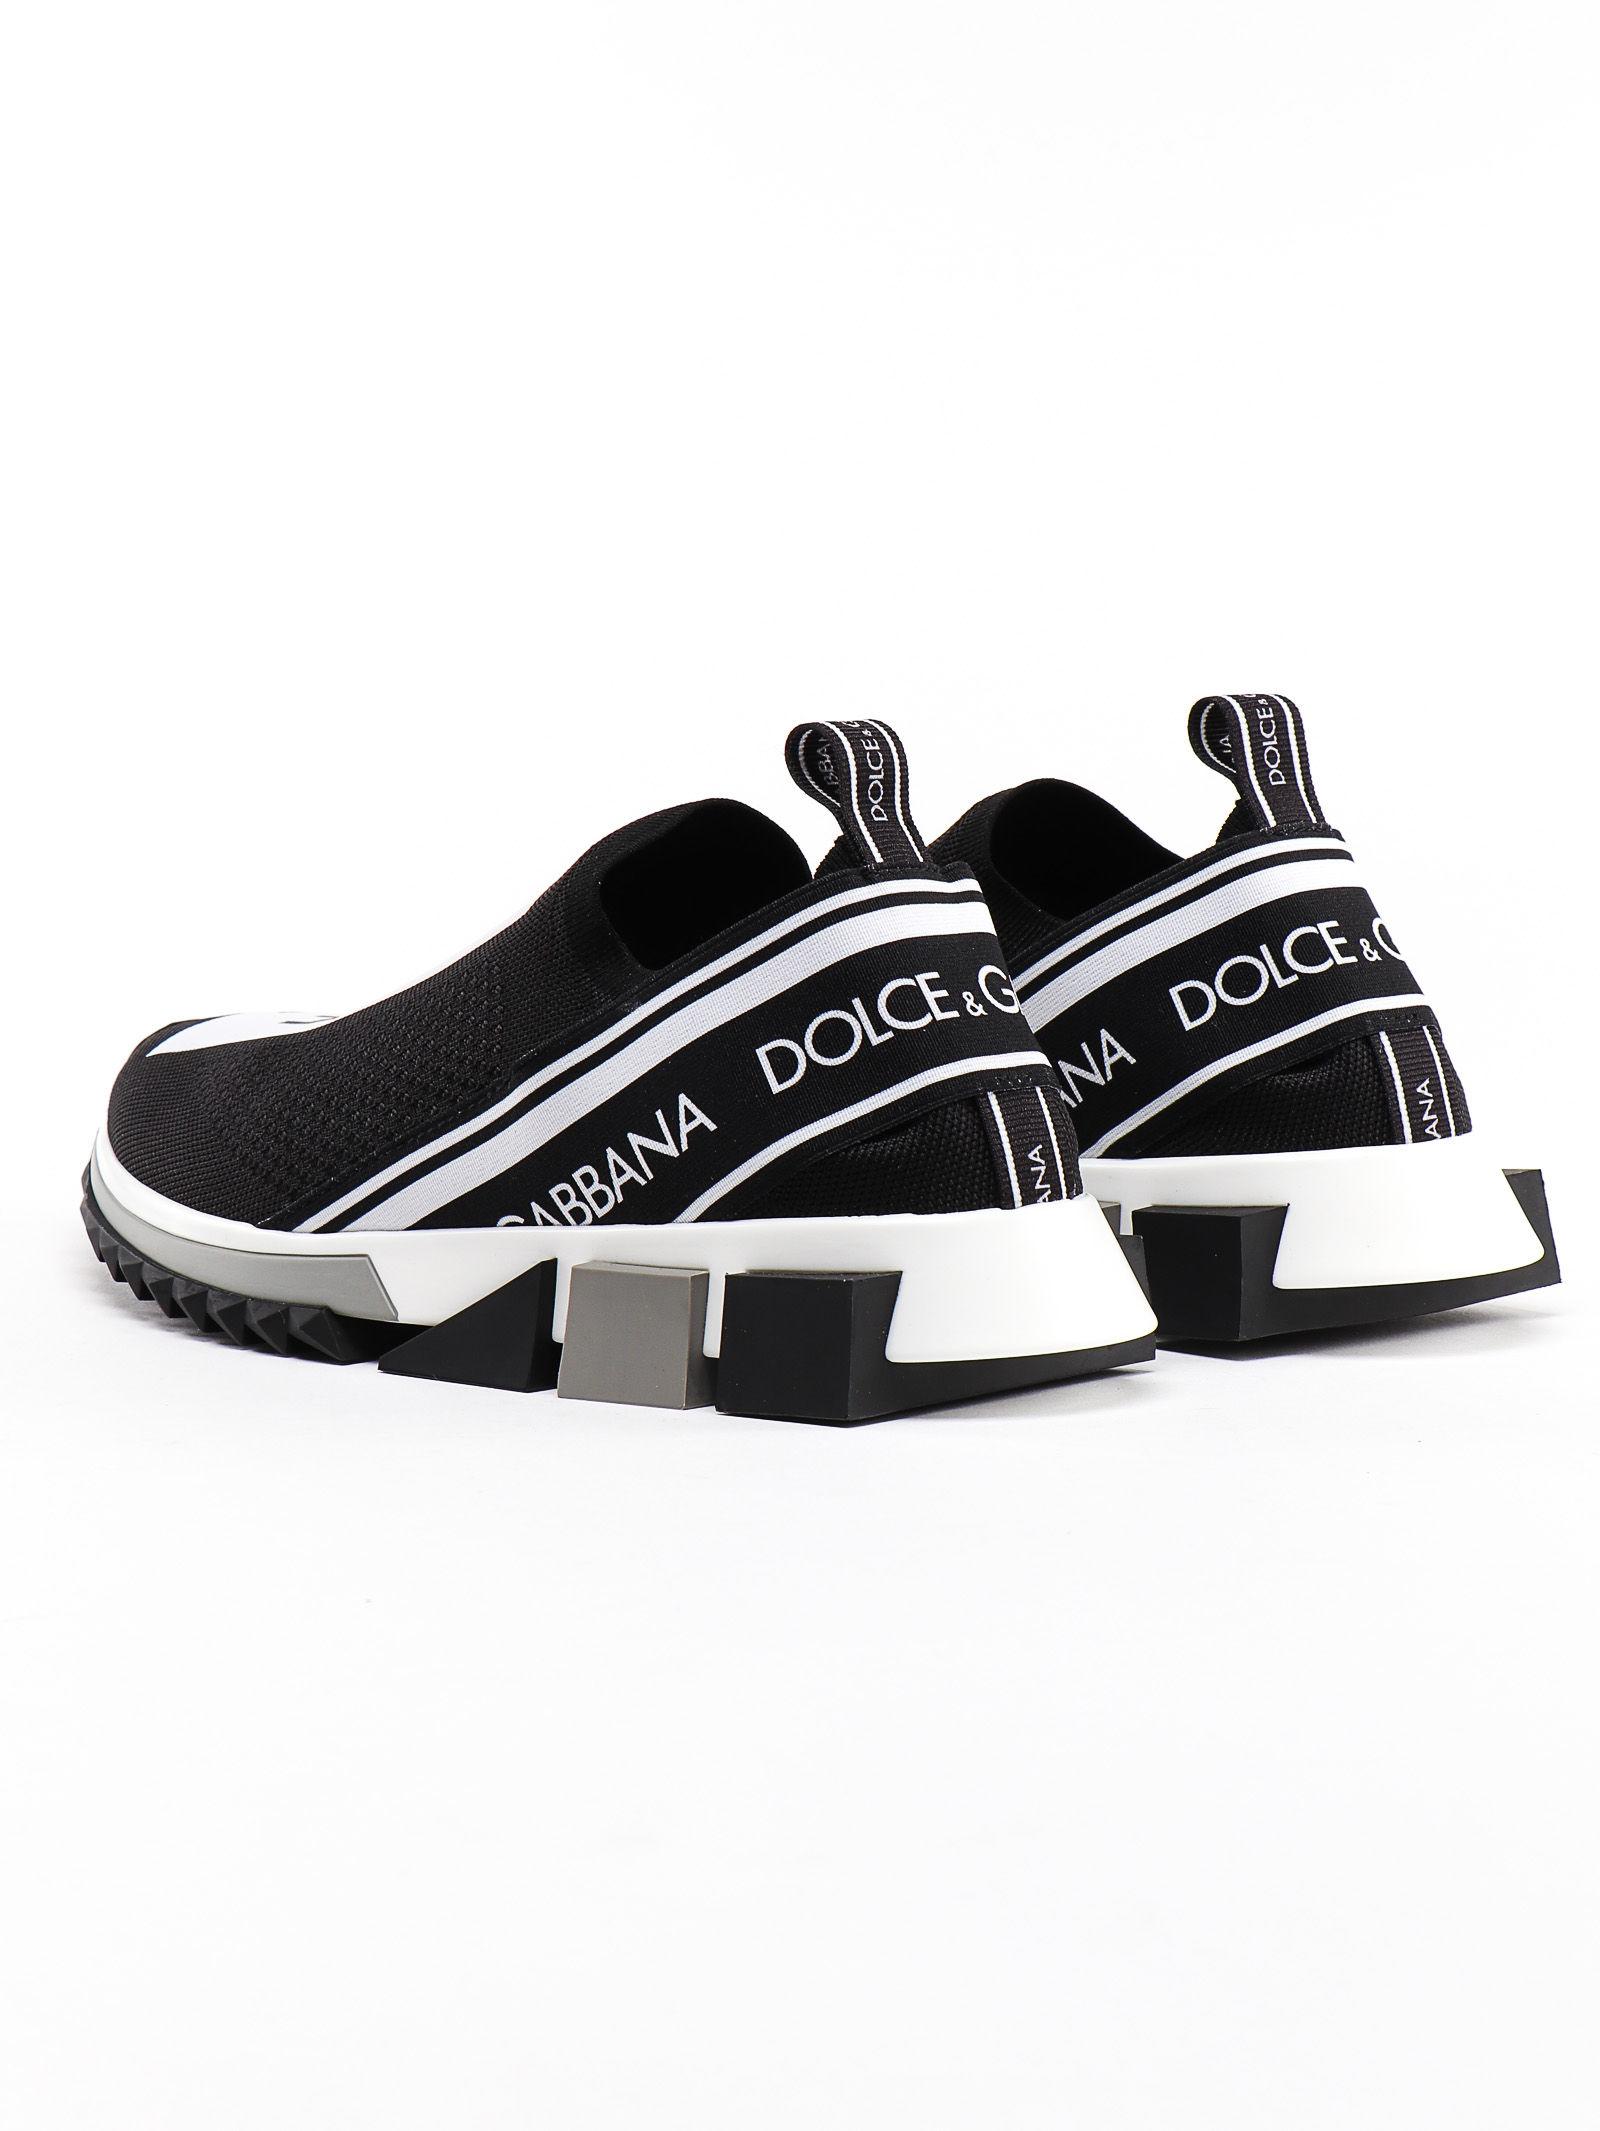 Dolce & Gabbana Synthetic Sorrento Sneaker in Black for Men - Lyst